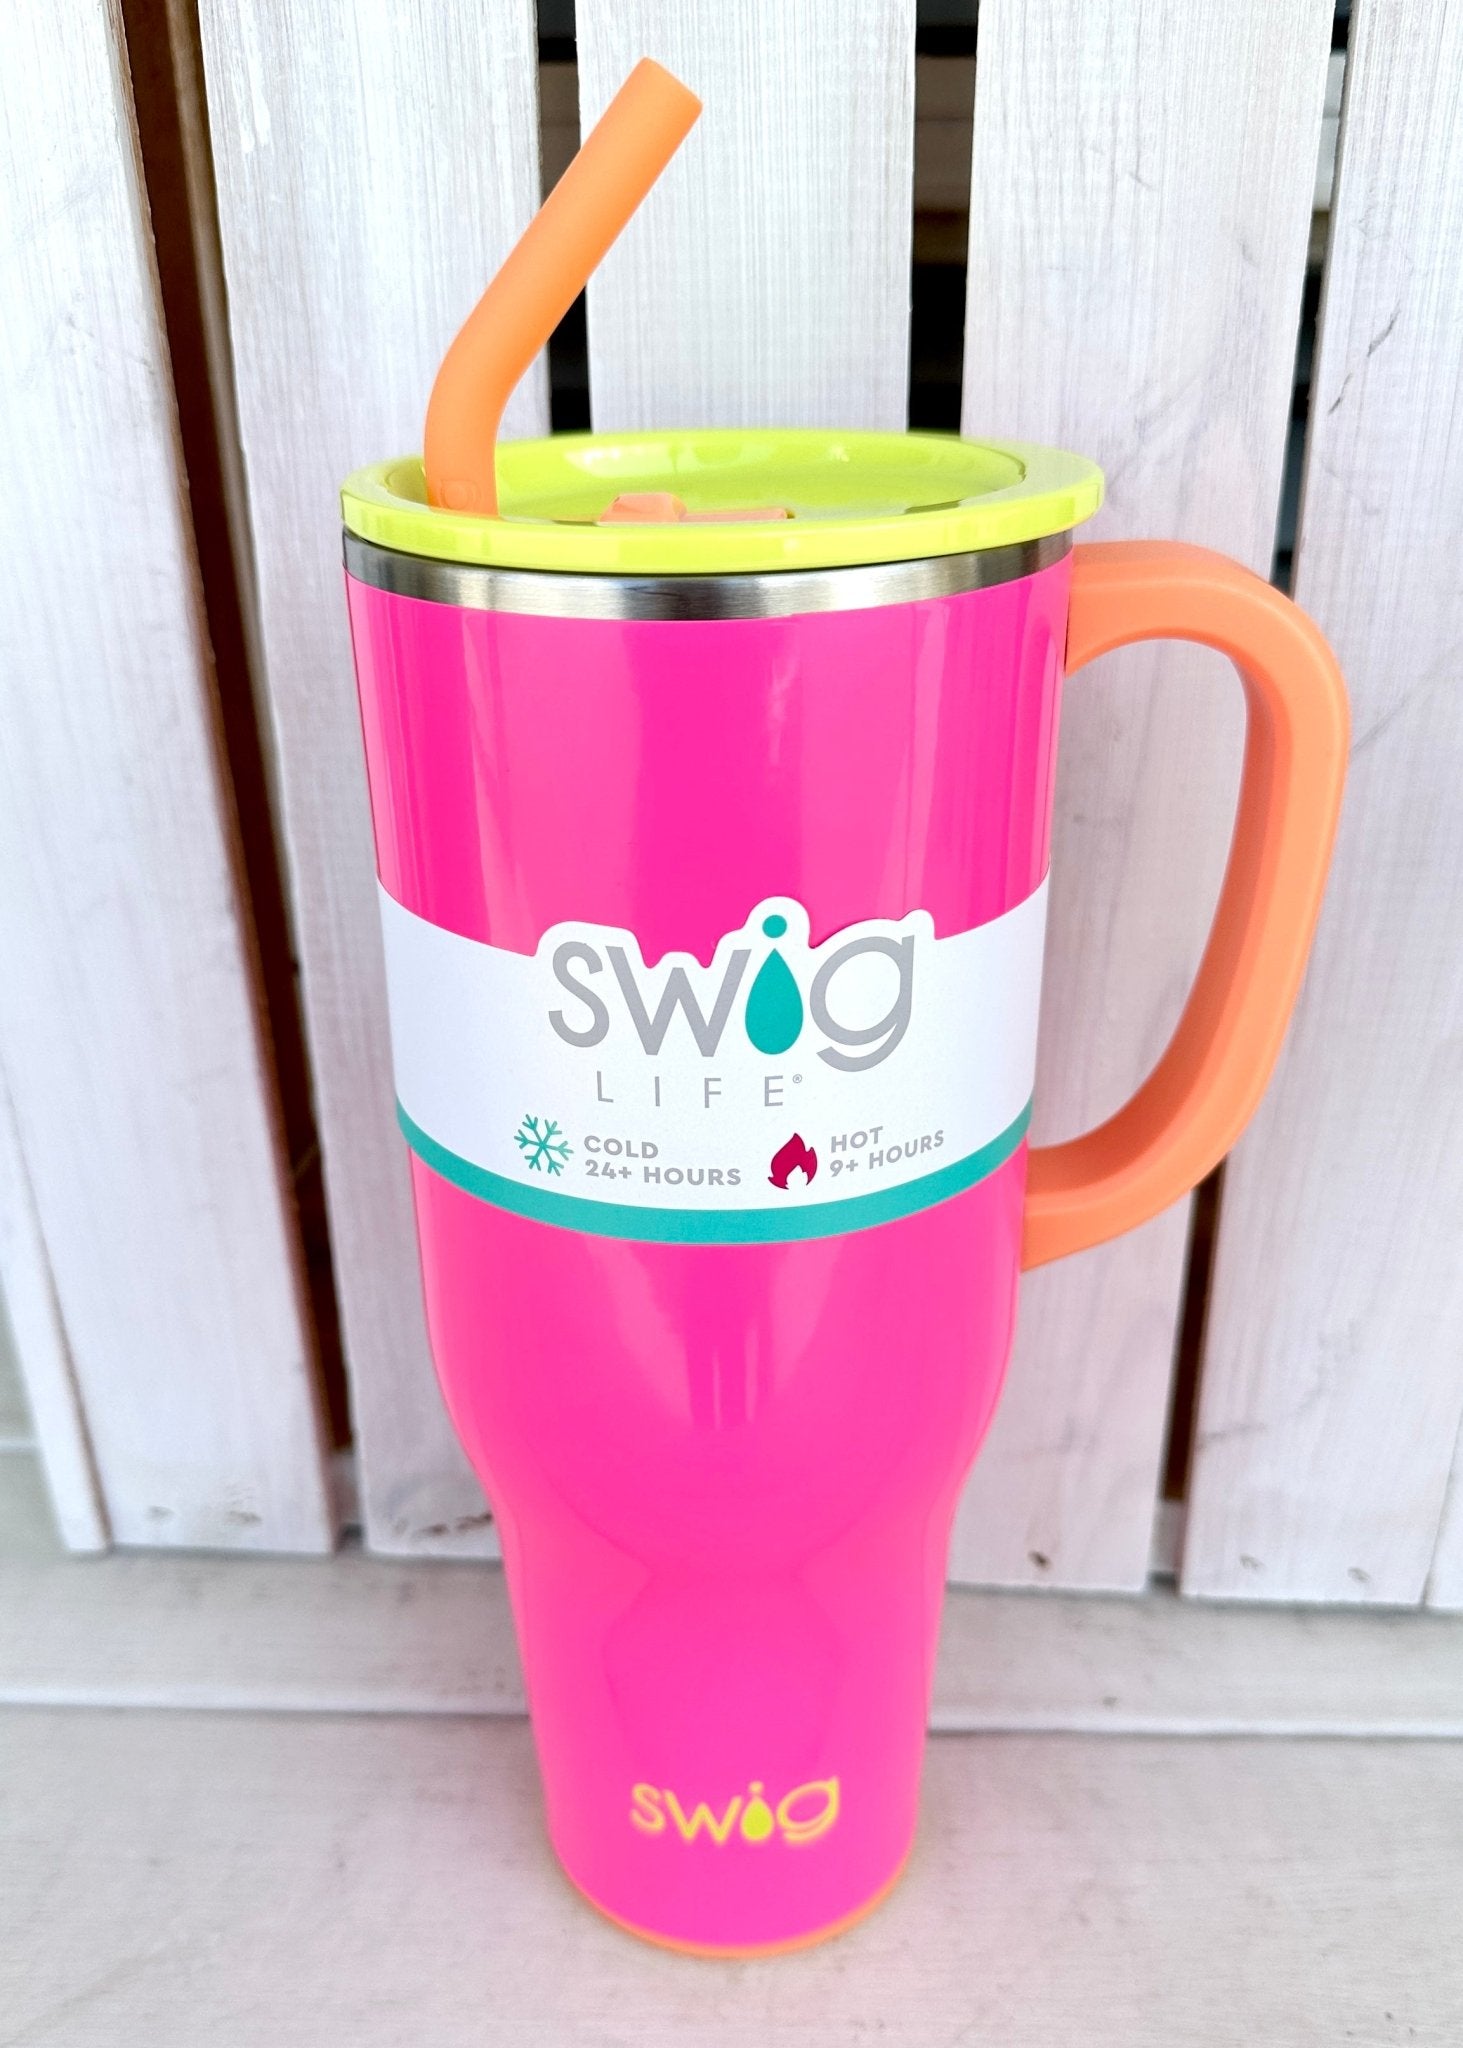 Swig 40 oz Mega Mug Hot Pink